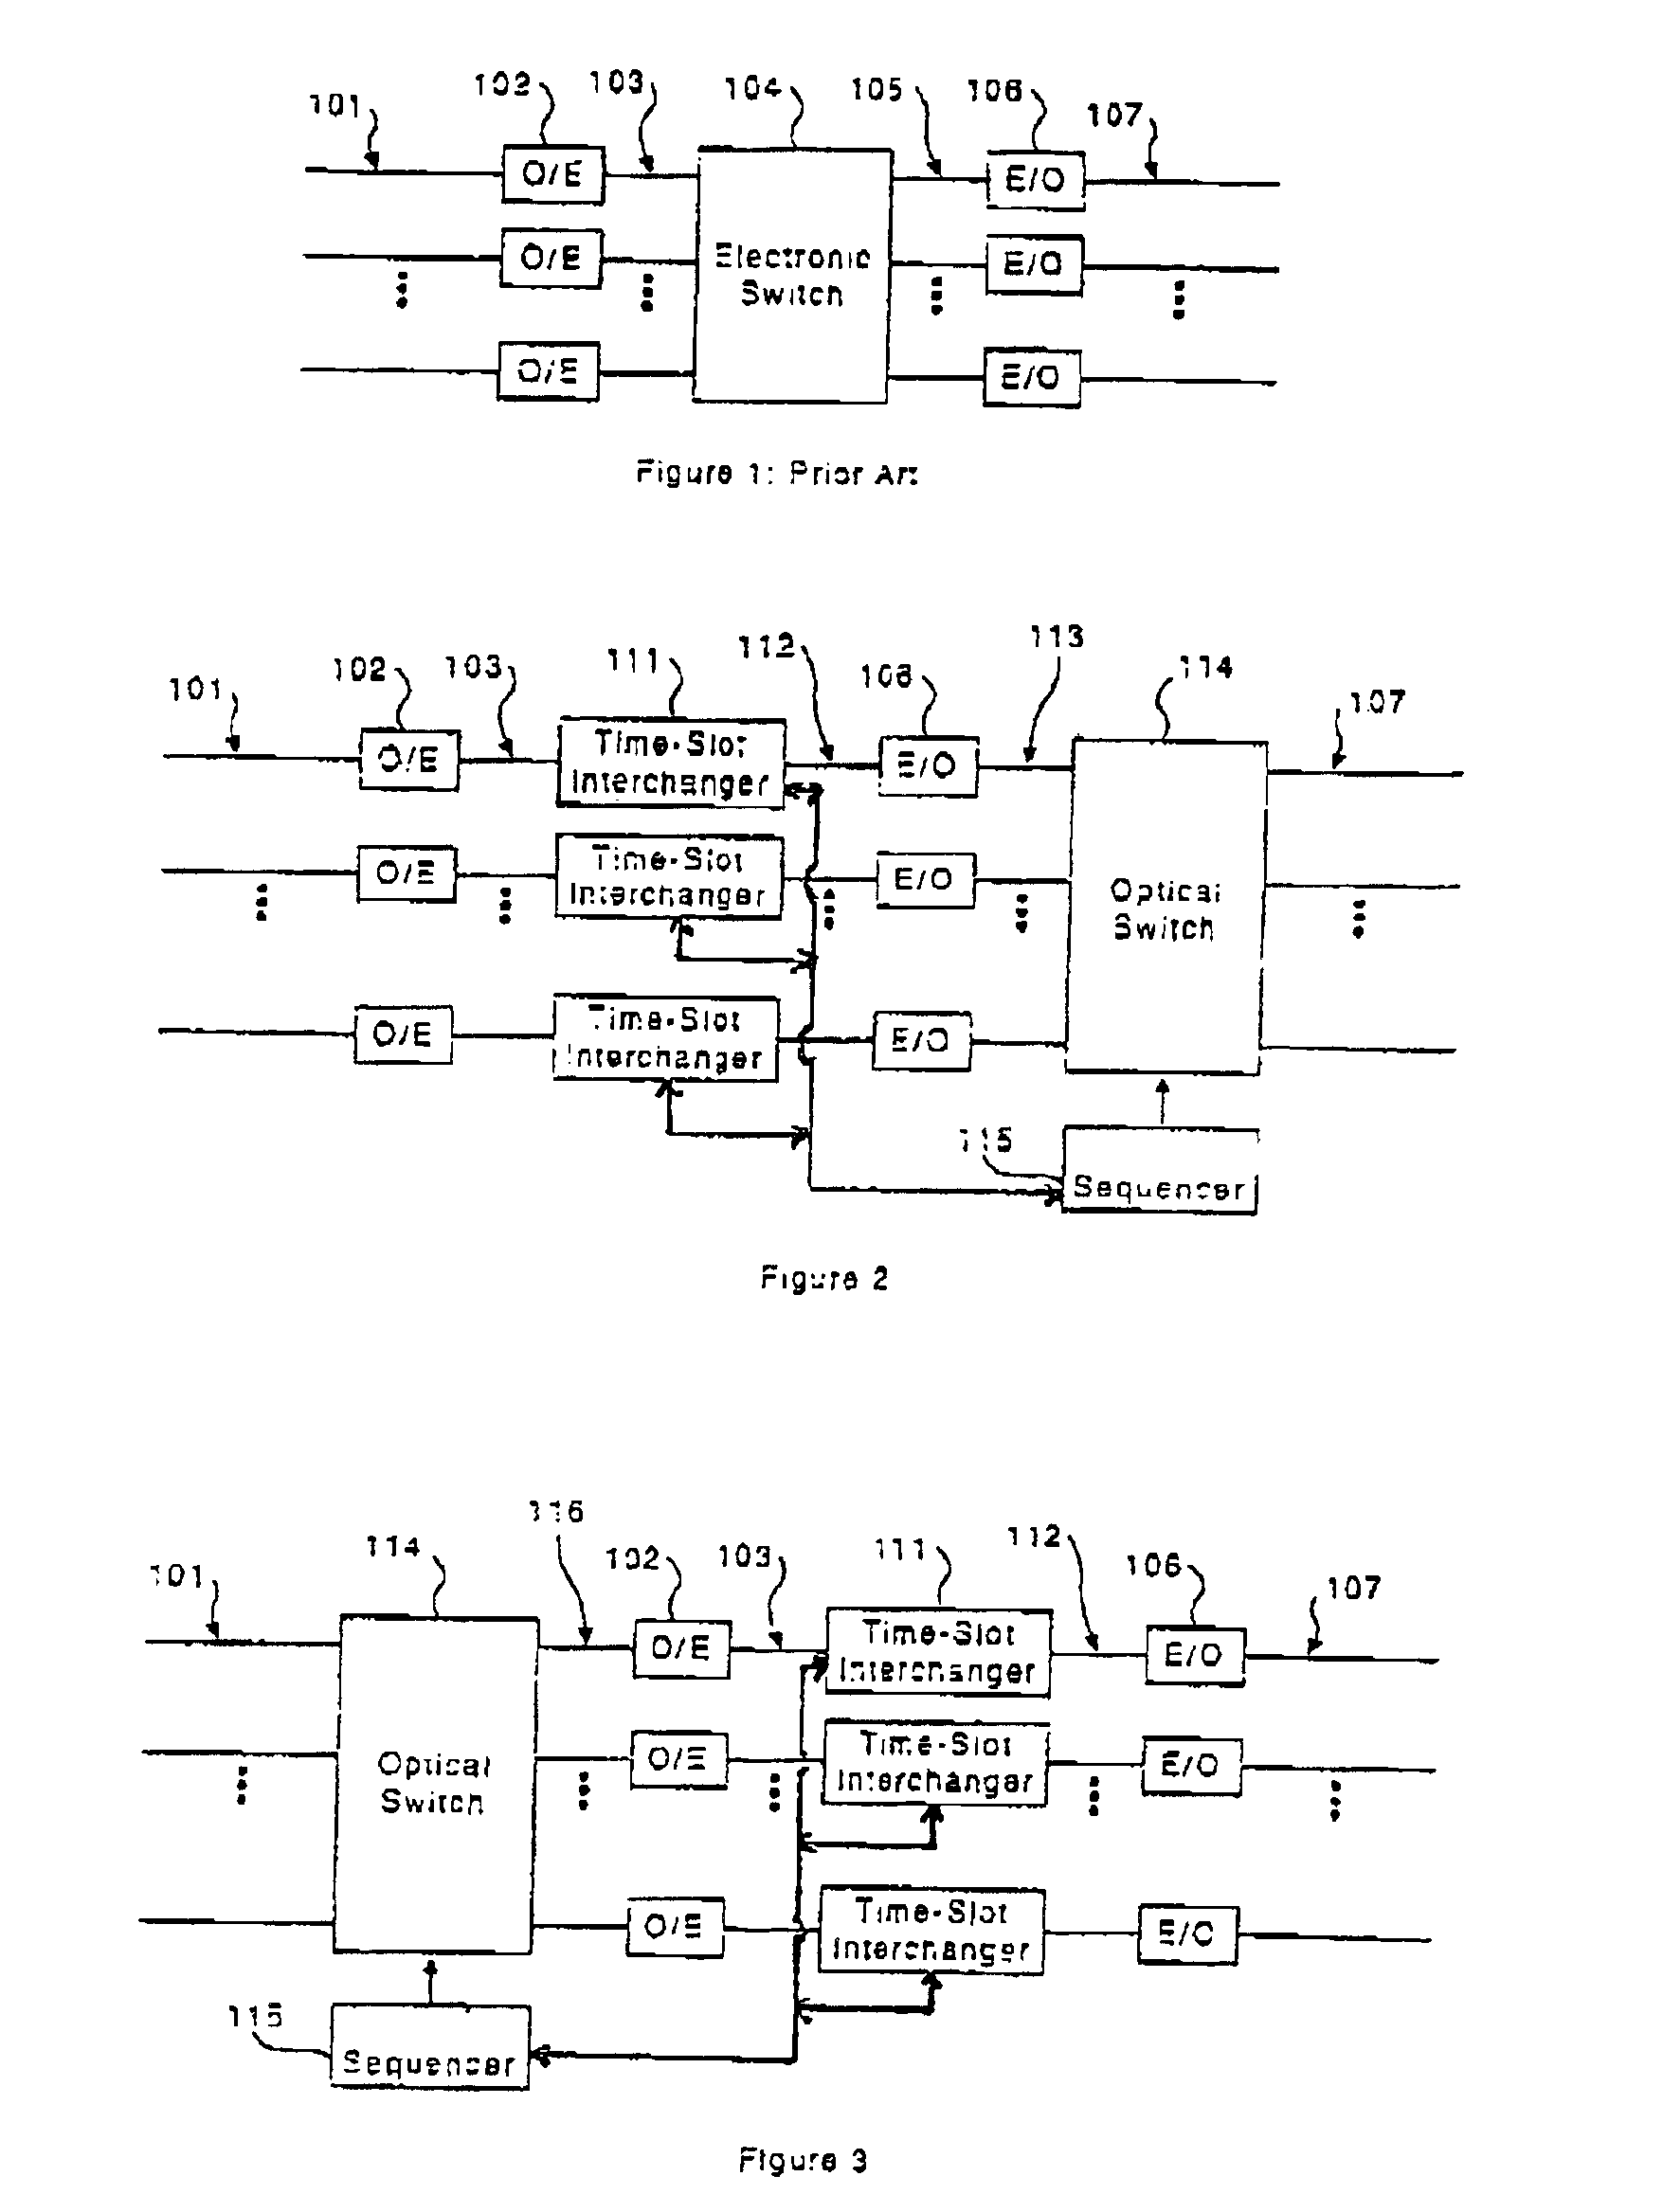 Photonic switch using time-slot interchange